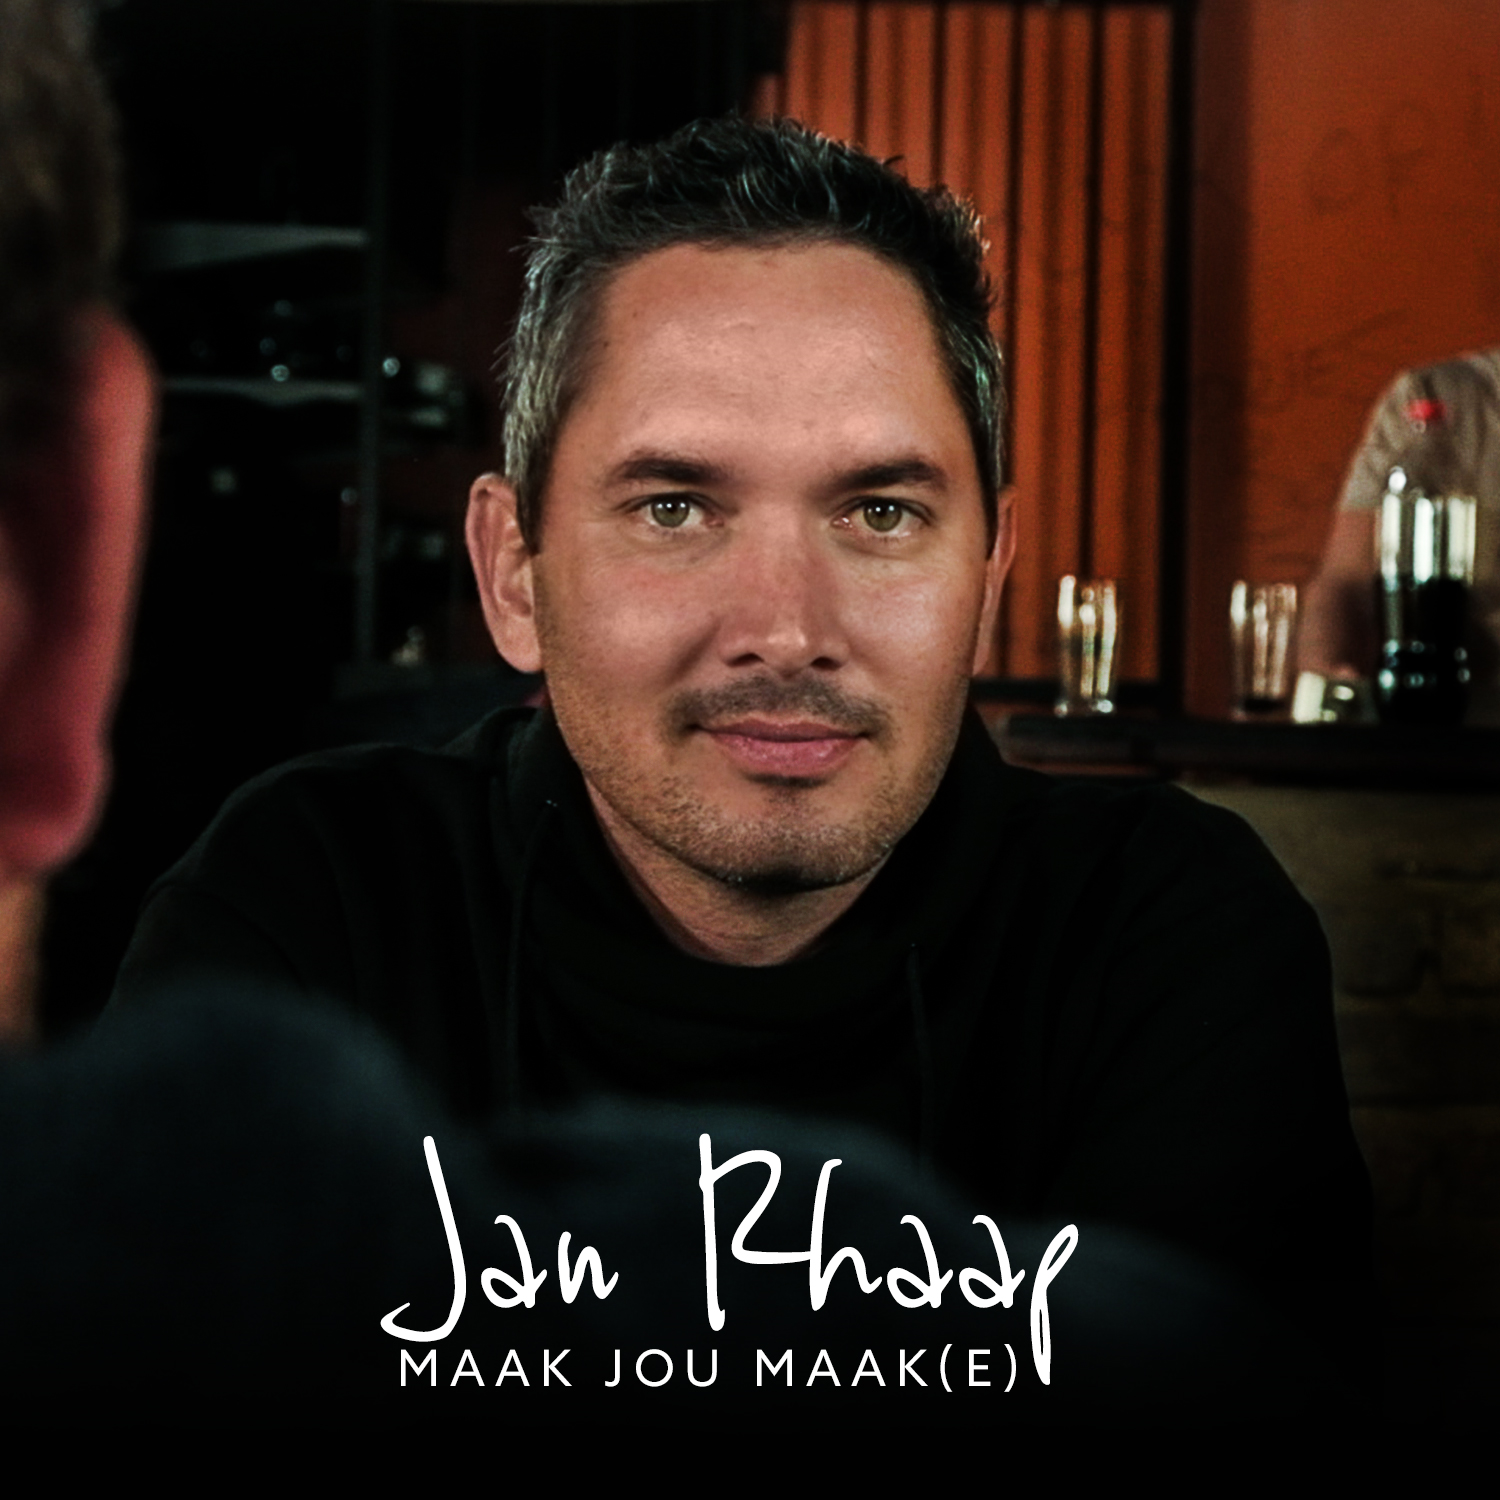 NEW MUSIC: Jan Rhaap - Maak Jou Maak(e)